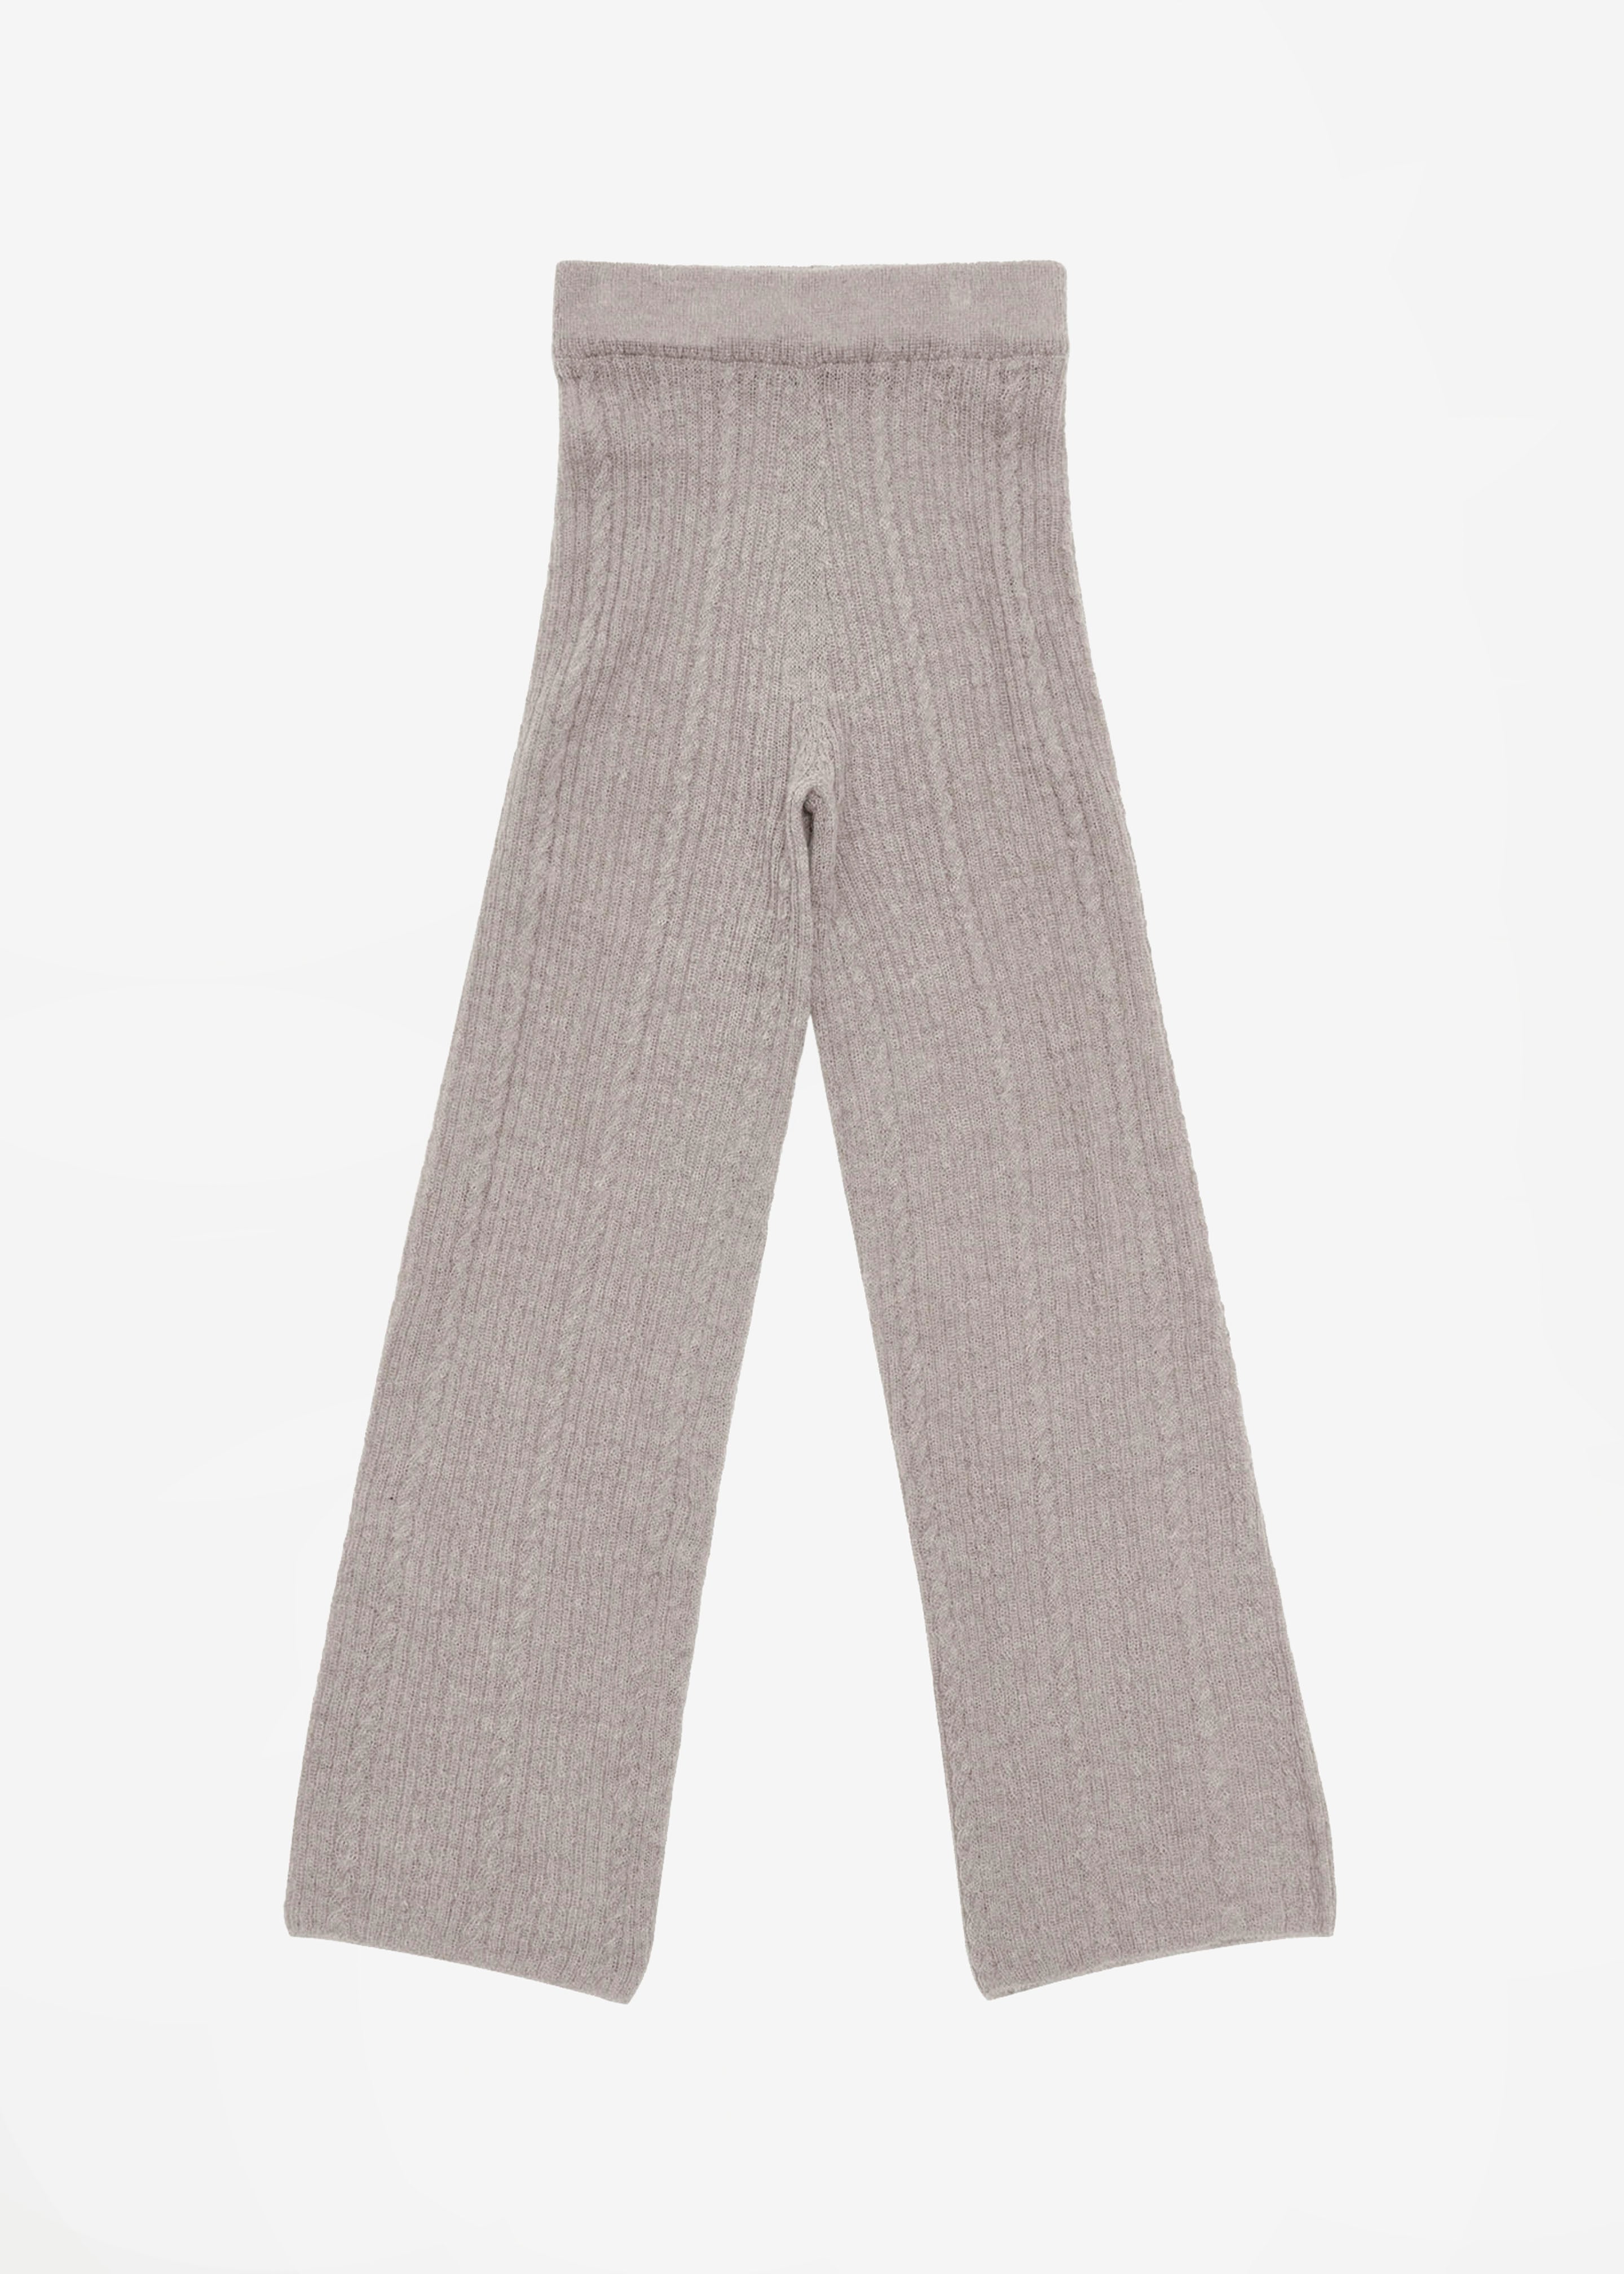 Amomento Sheer Knit Pants - Charcoal - 8